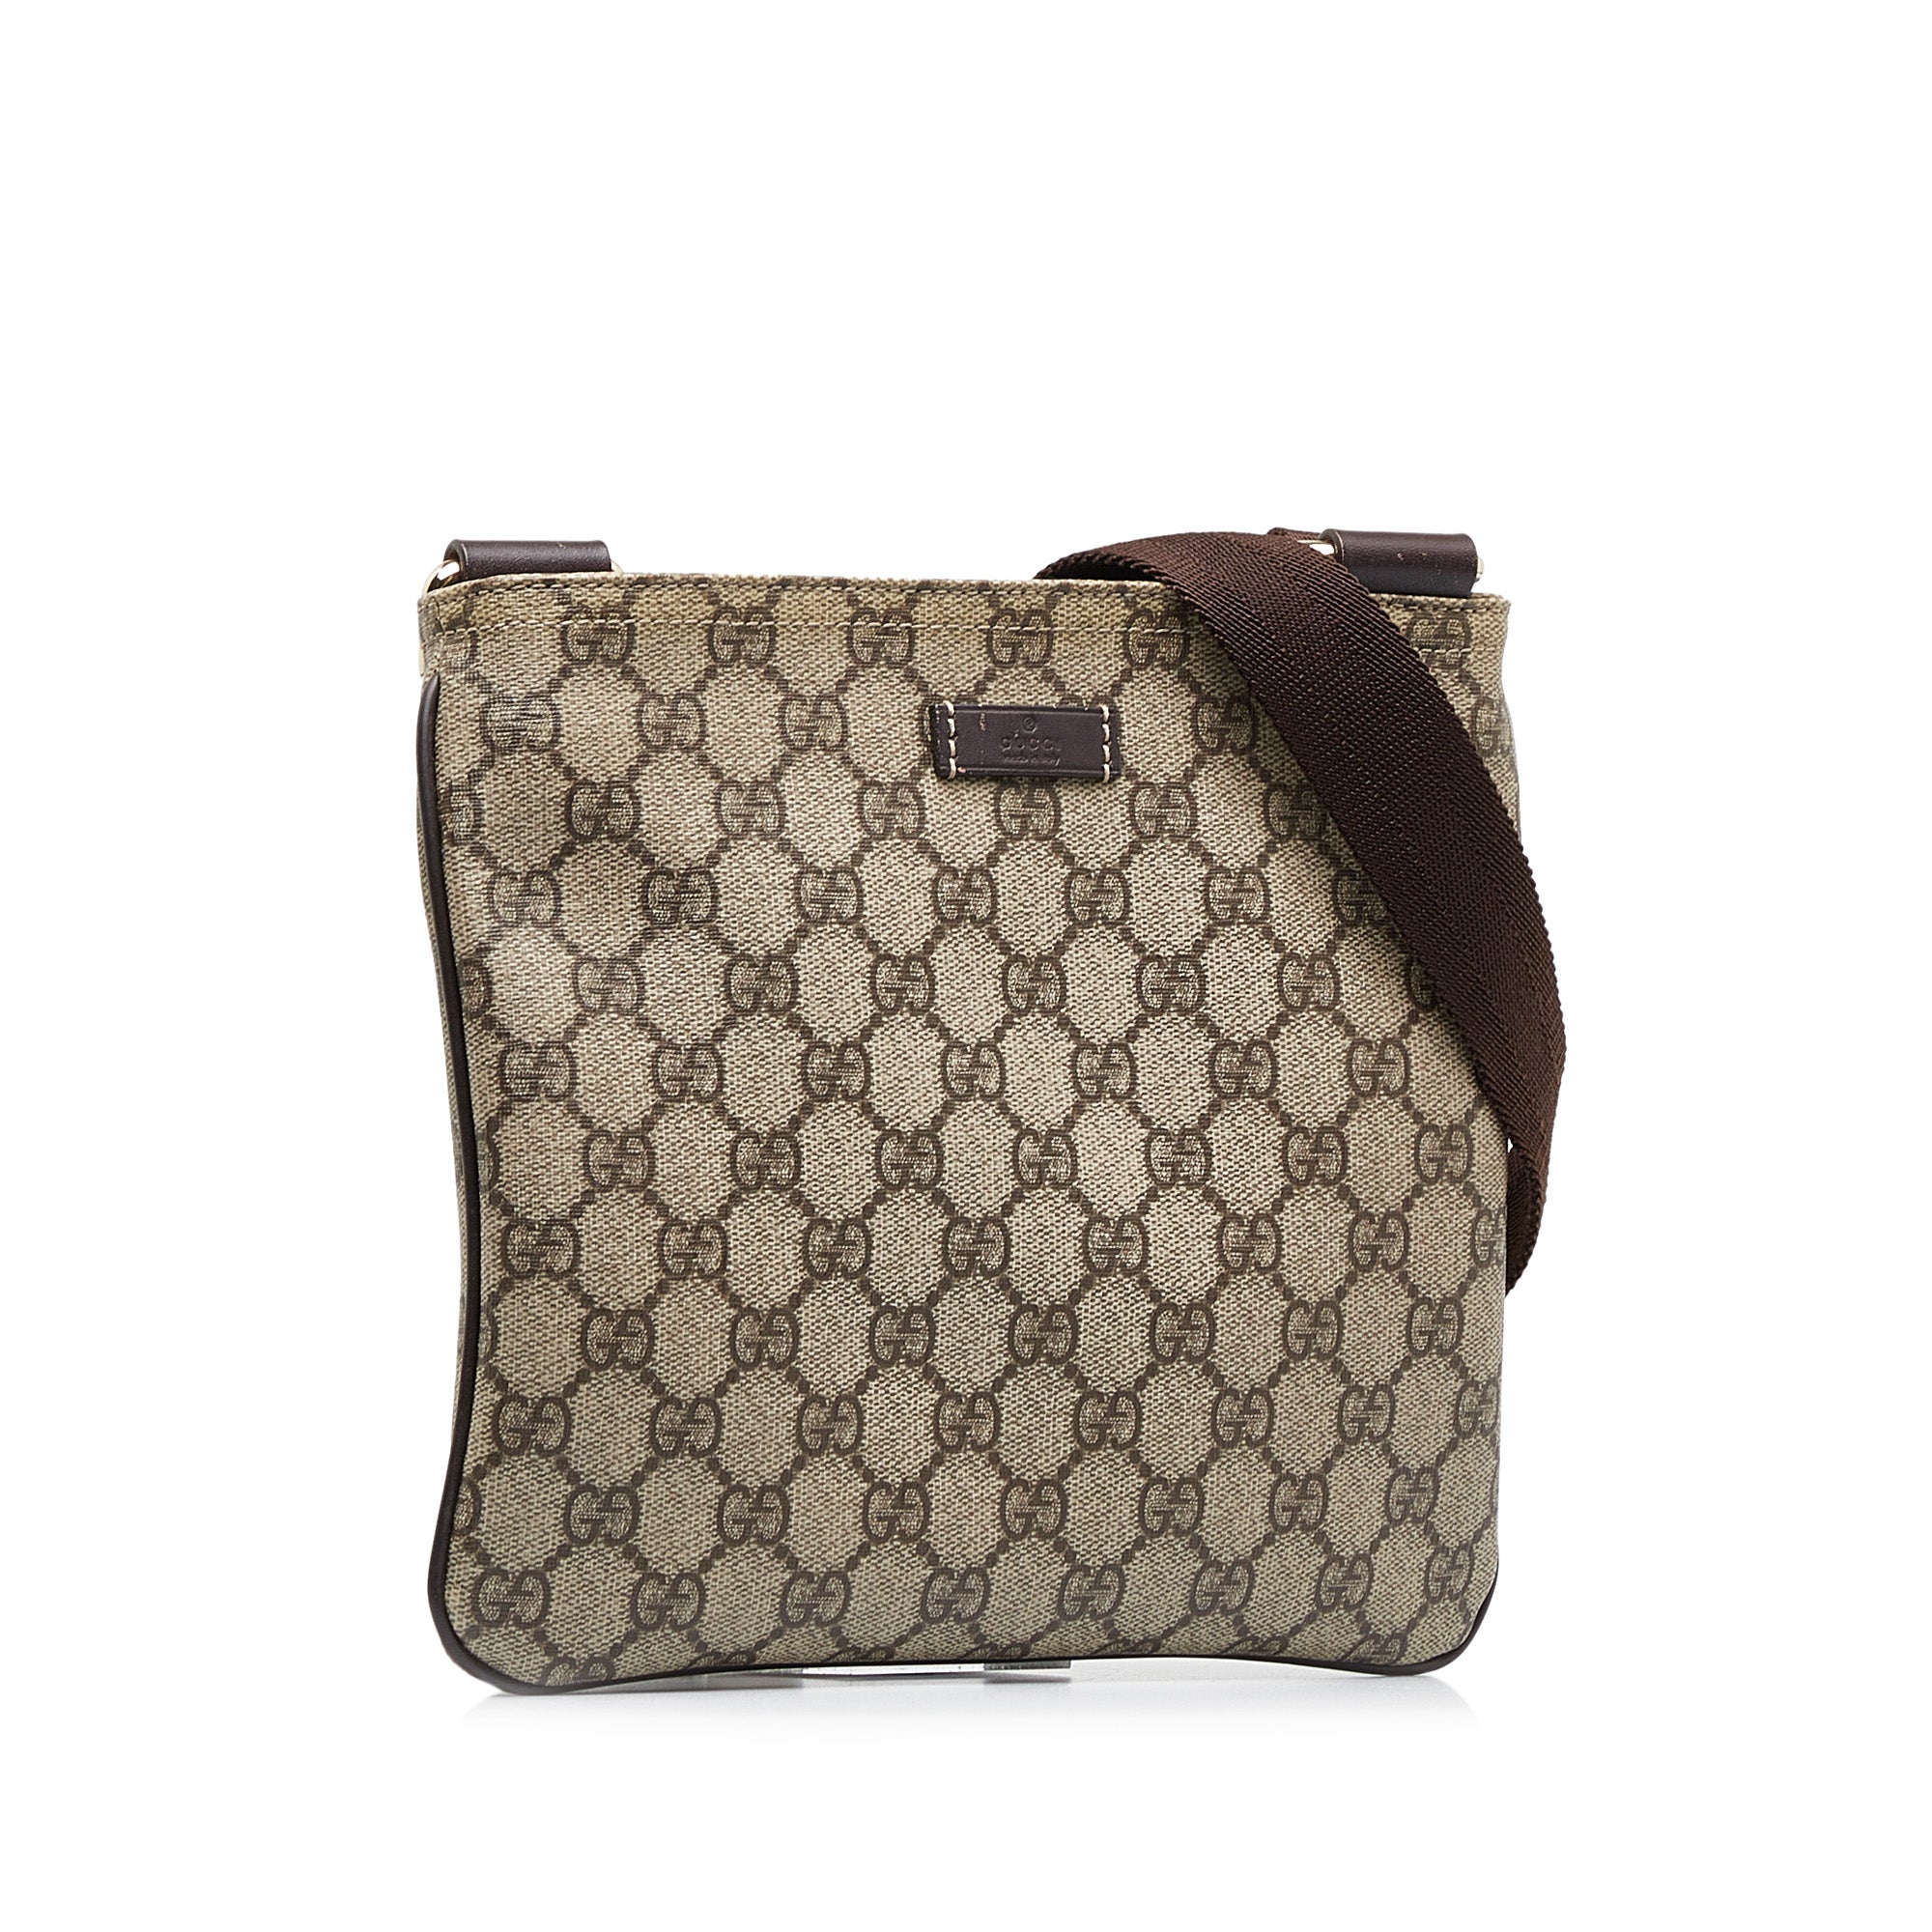 Used] Old Gucci Vintage Gucci Mini Boston Bag Handbag Barrel Bag